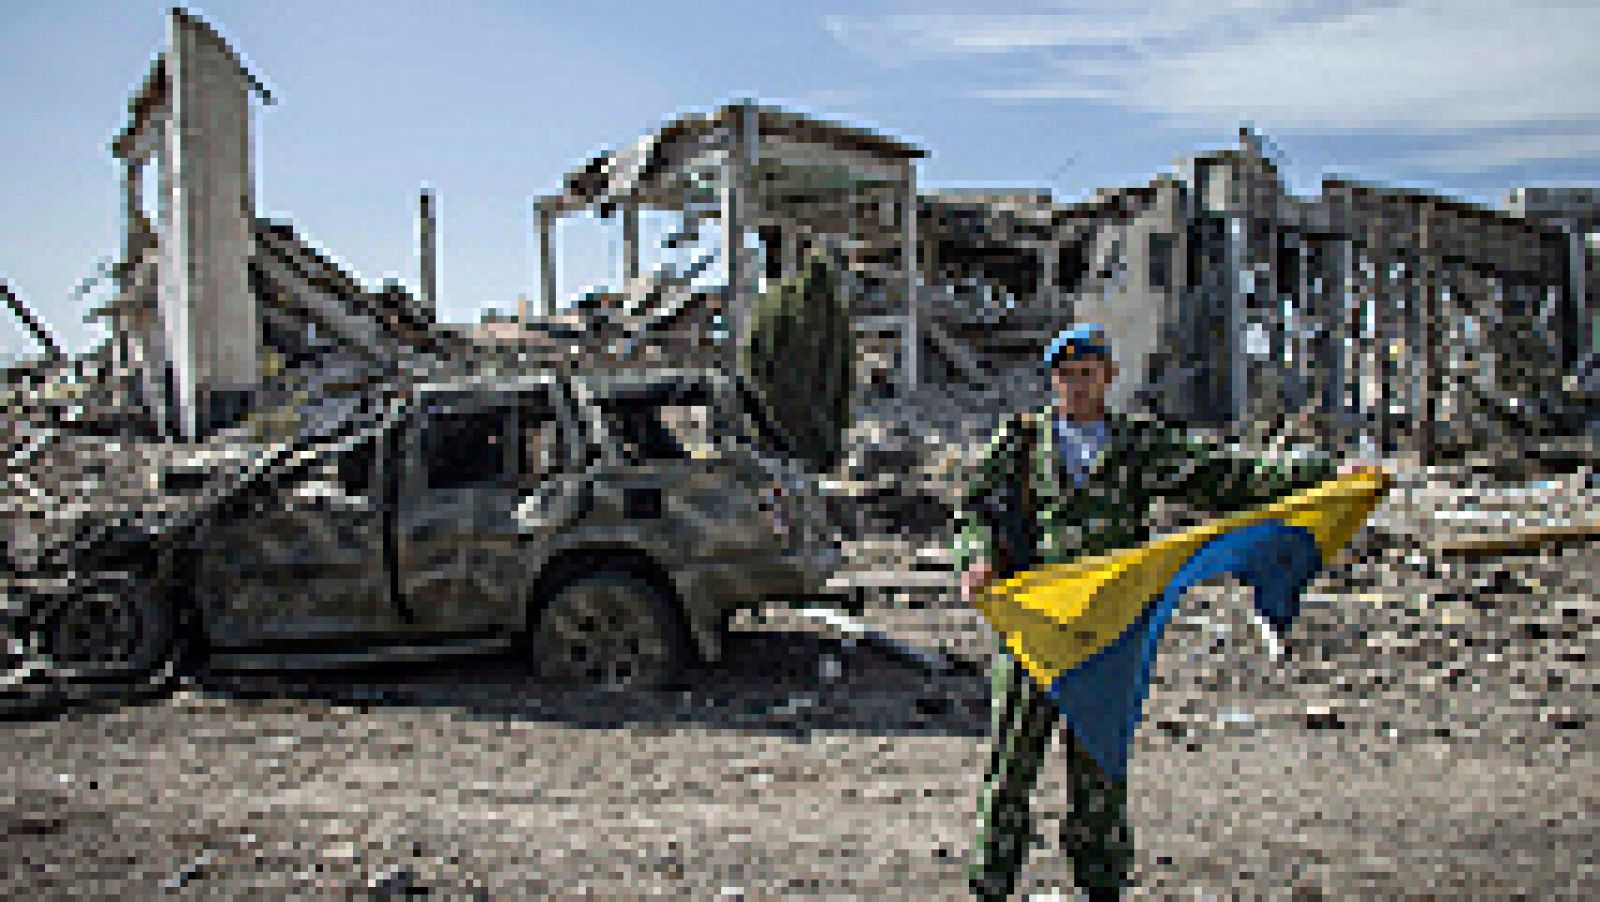 Telediario 1: Poroshenko lanza otro plan para el este de Ucrania mientras la OTAN inicia maniobras | RTVE Play